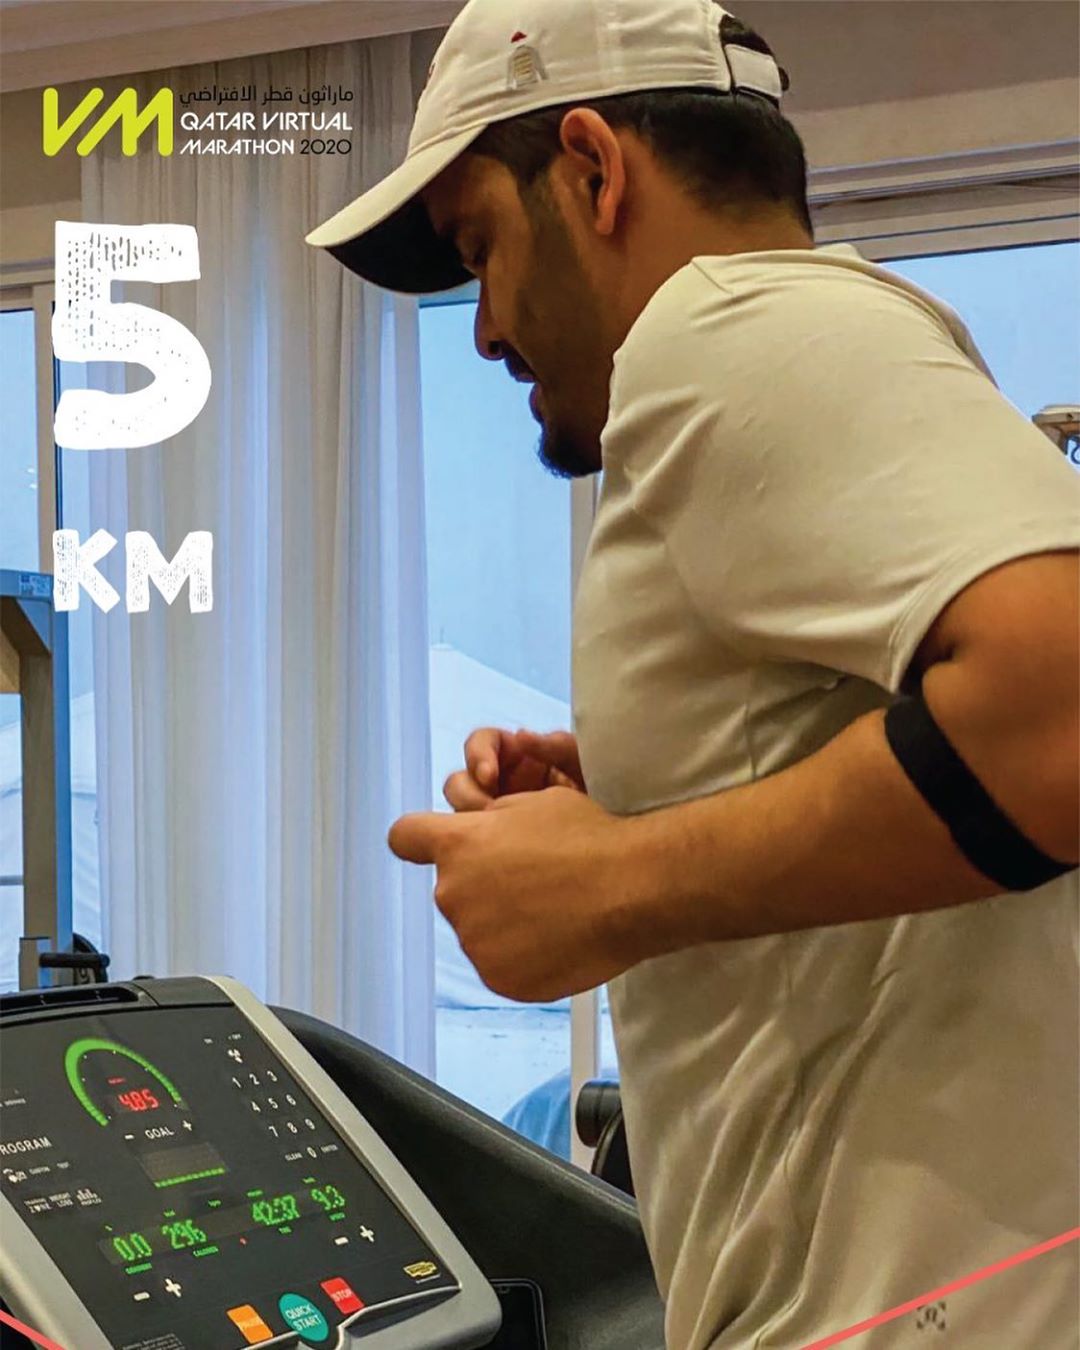 Sheikh Joaan participates in 5km virtual Marathon